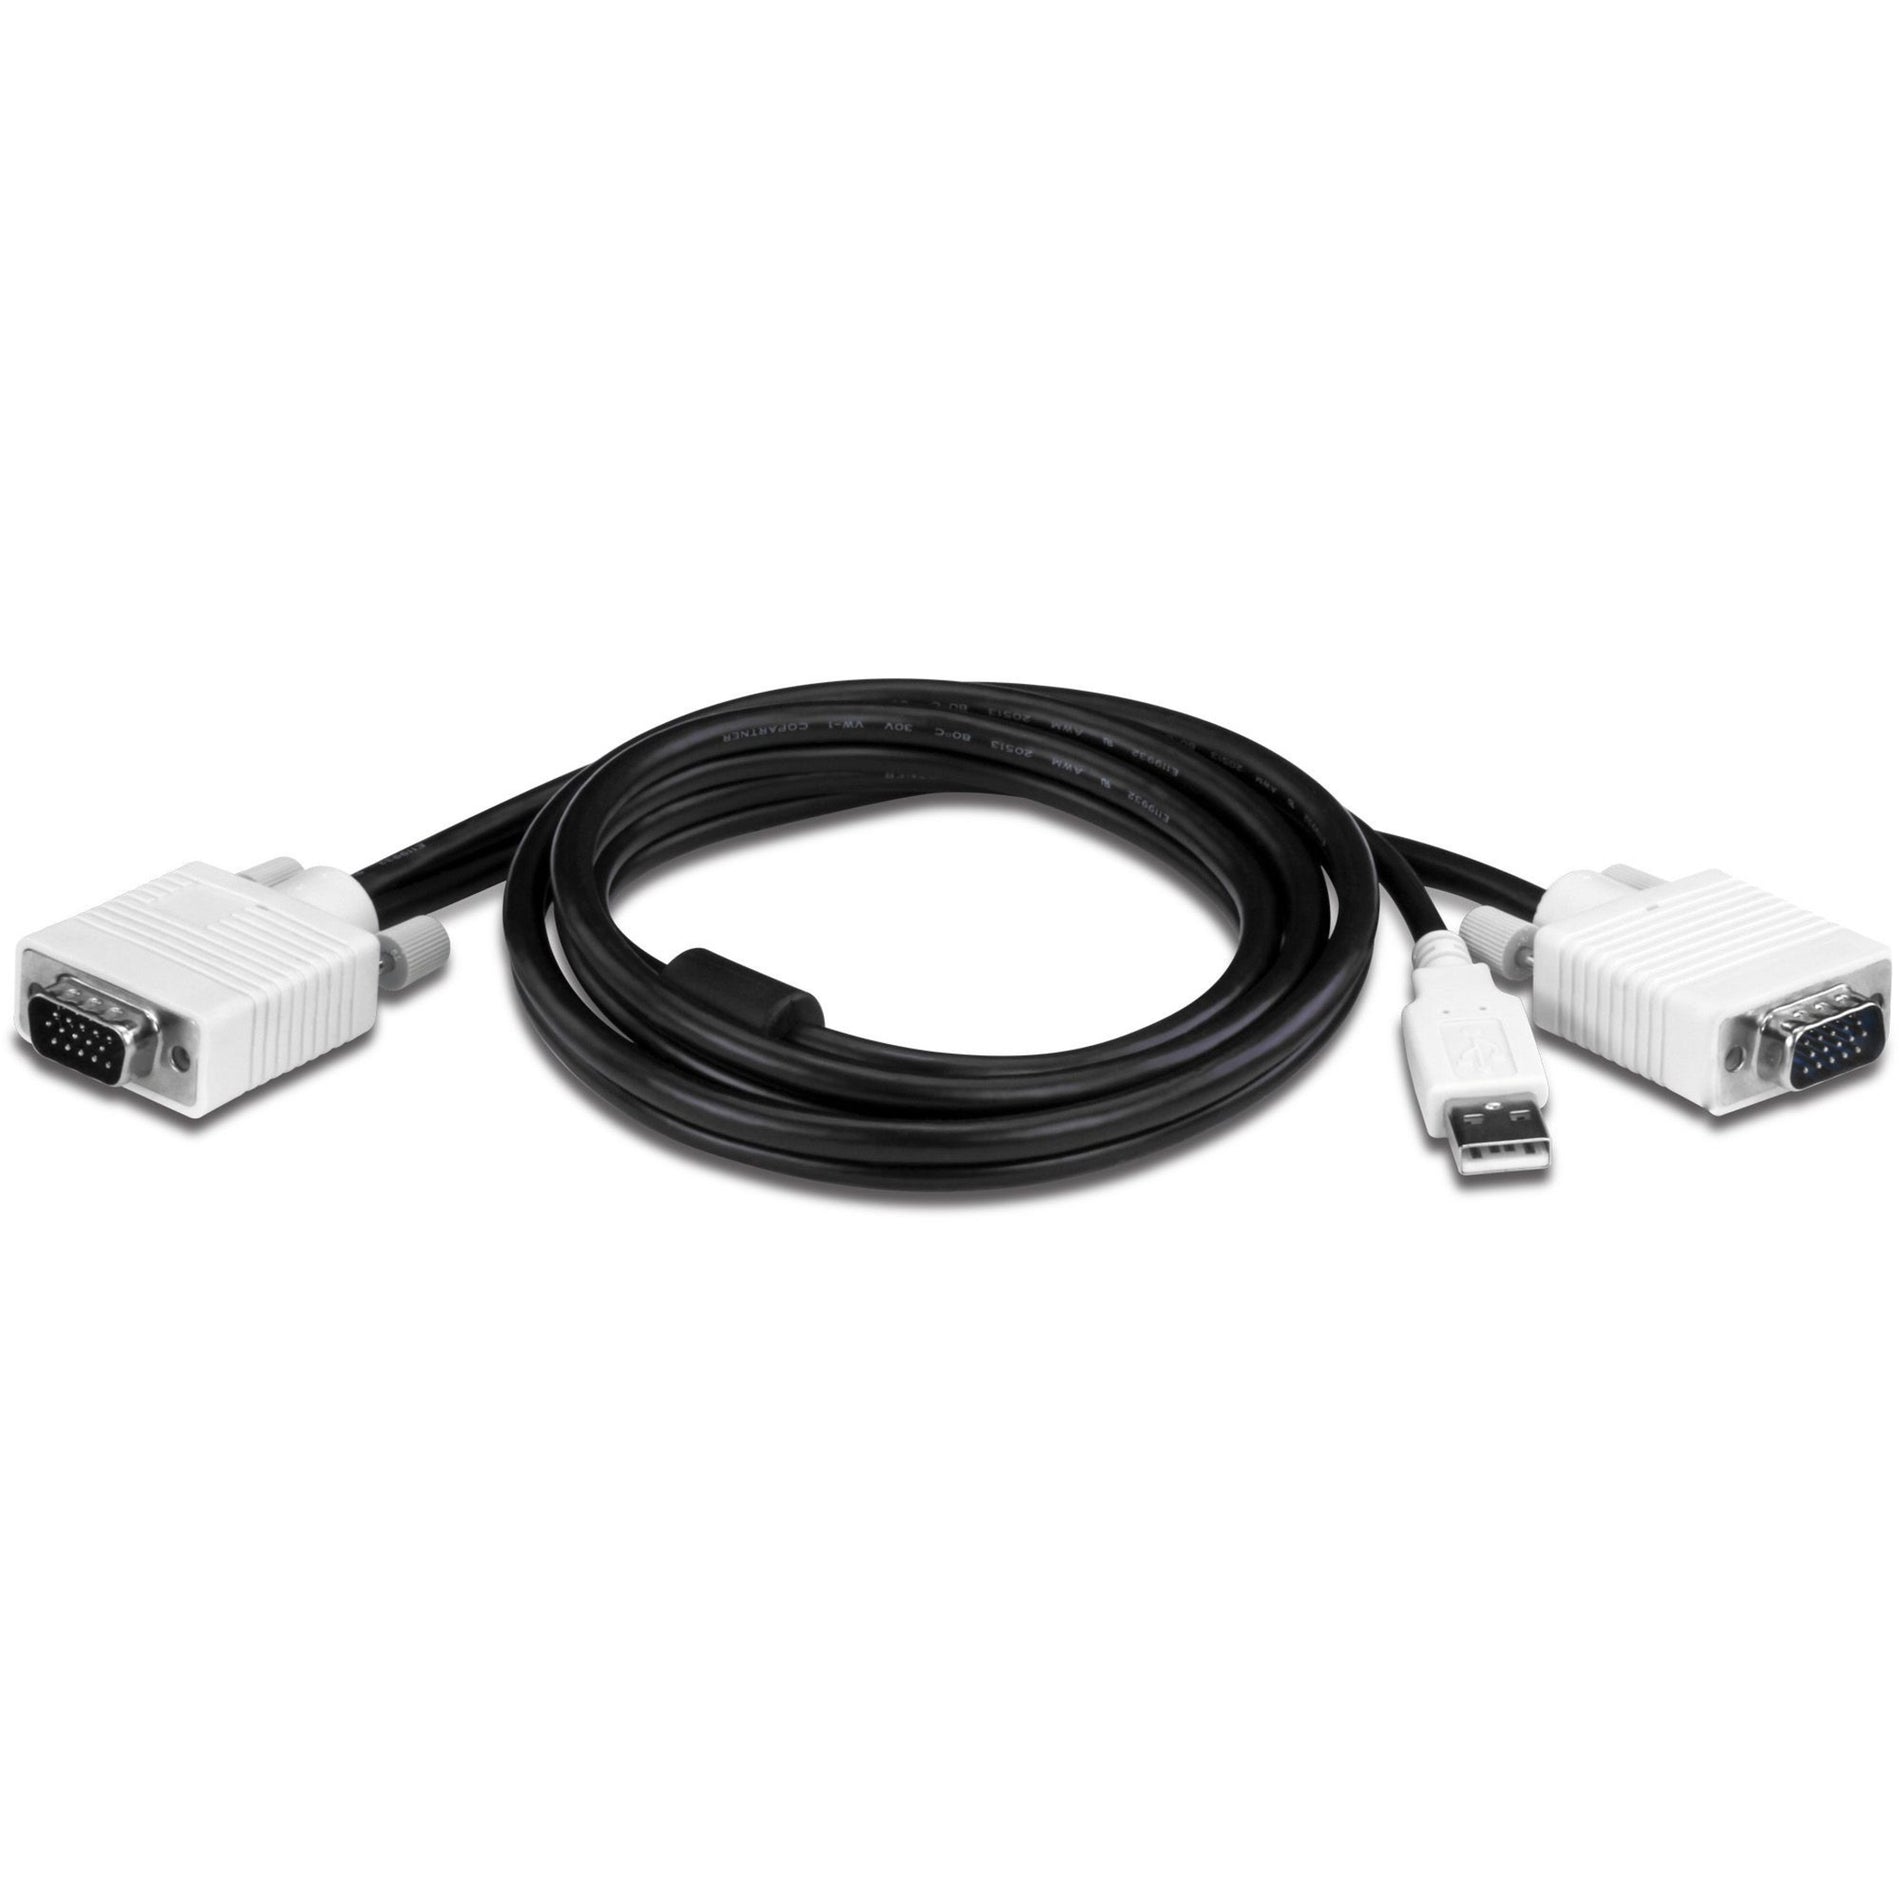 TRENDnet TK-209K 2-port USB KVM Switch Kit w/Audio, Manage Two PCs, USB 1.1, Hot-Plug, Auto-Scan, Hot-Keys, Windows & Linux Compliant